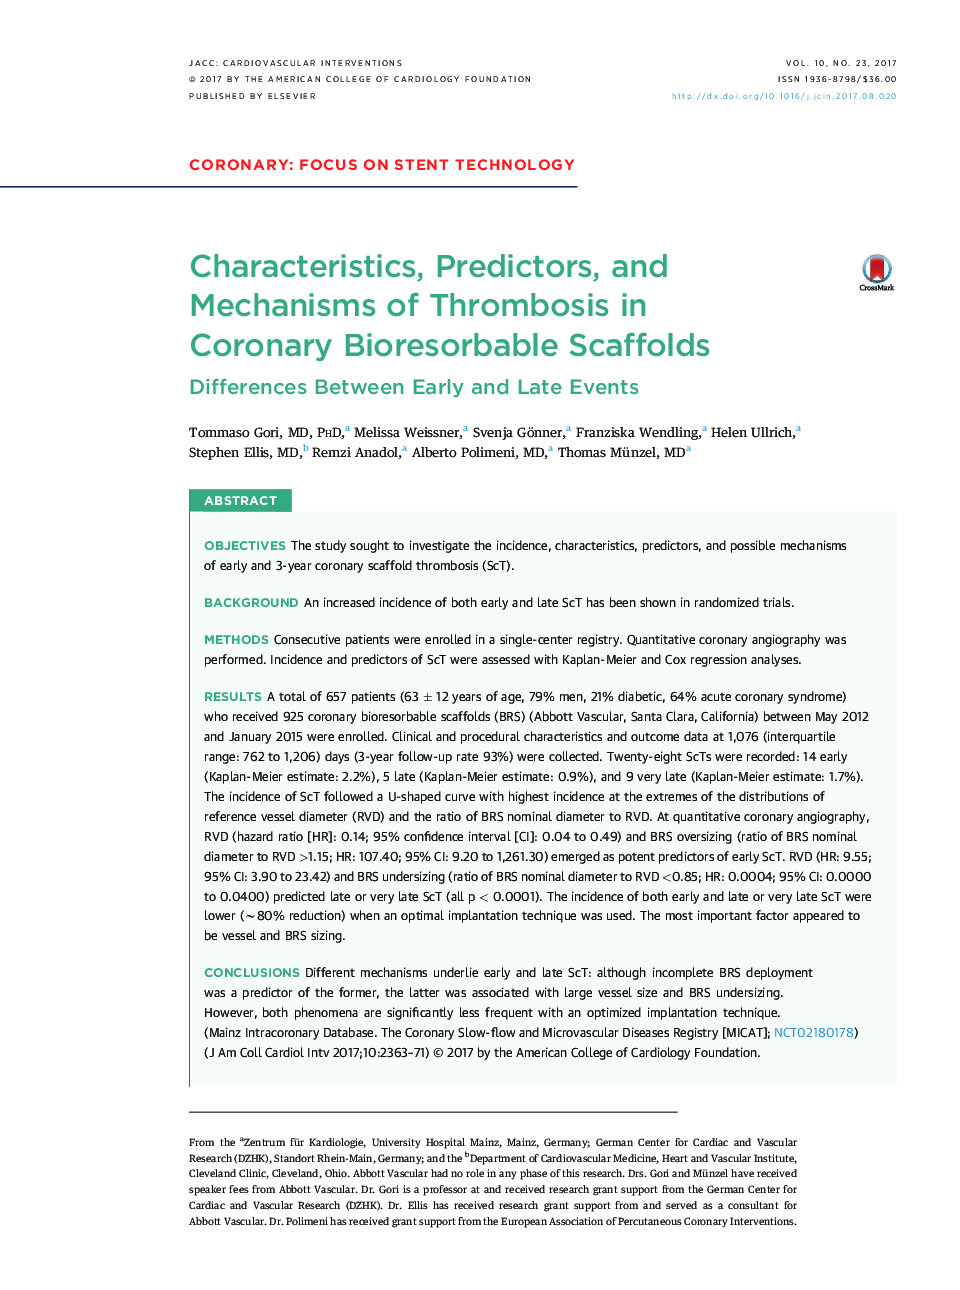 Characteristics, Predictors, and Mechanisms of Thrombosis inÂ Coronary Bioresorbable Scaffolds